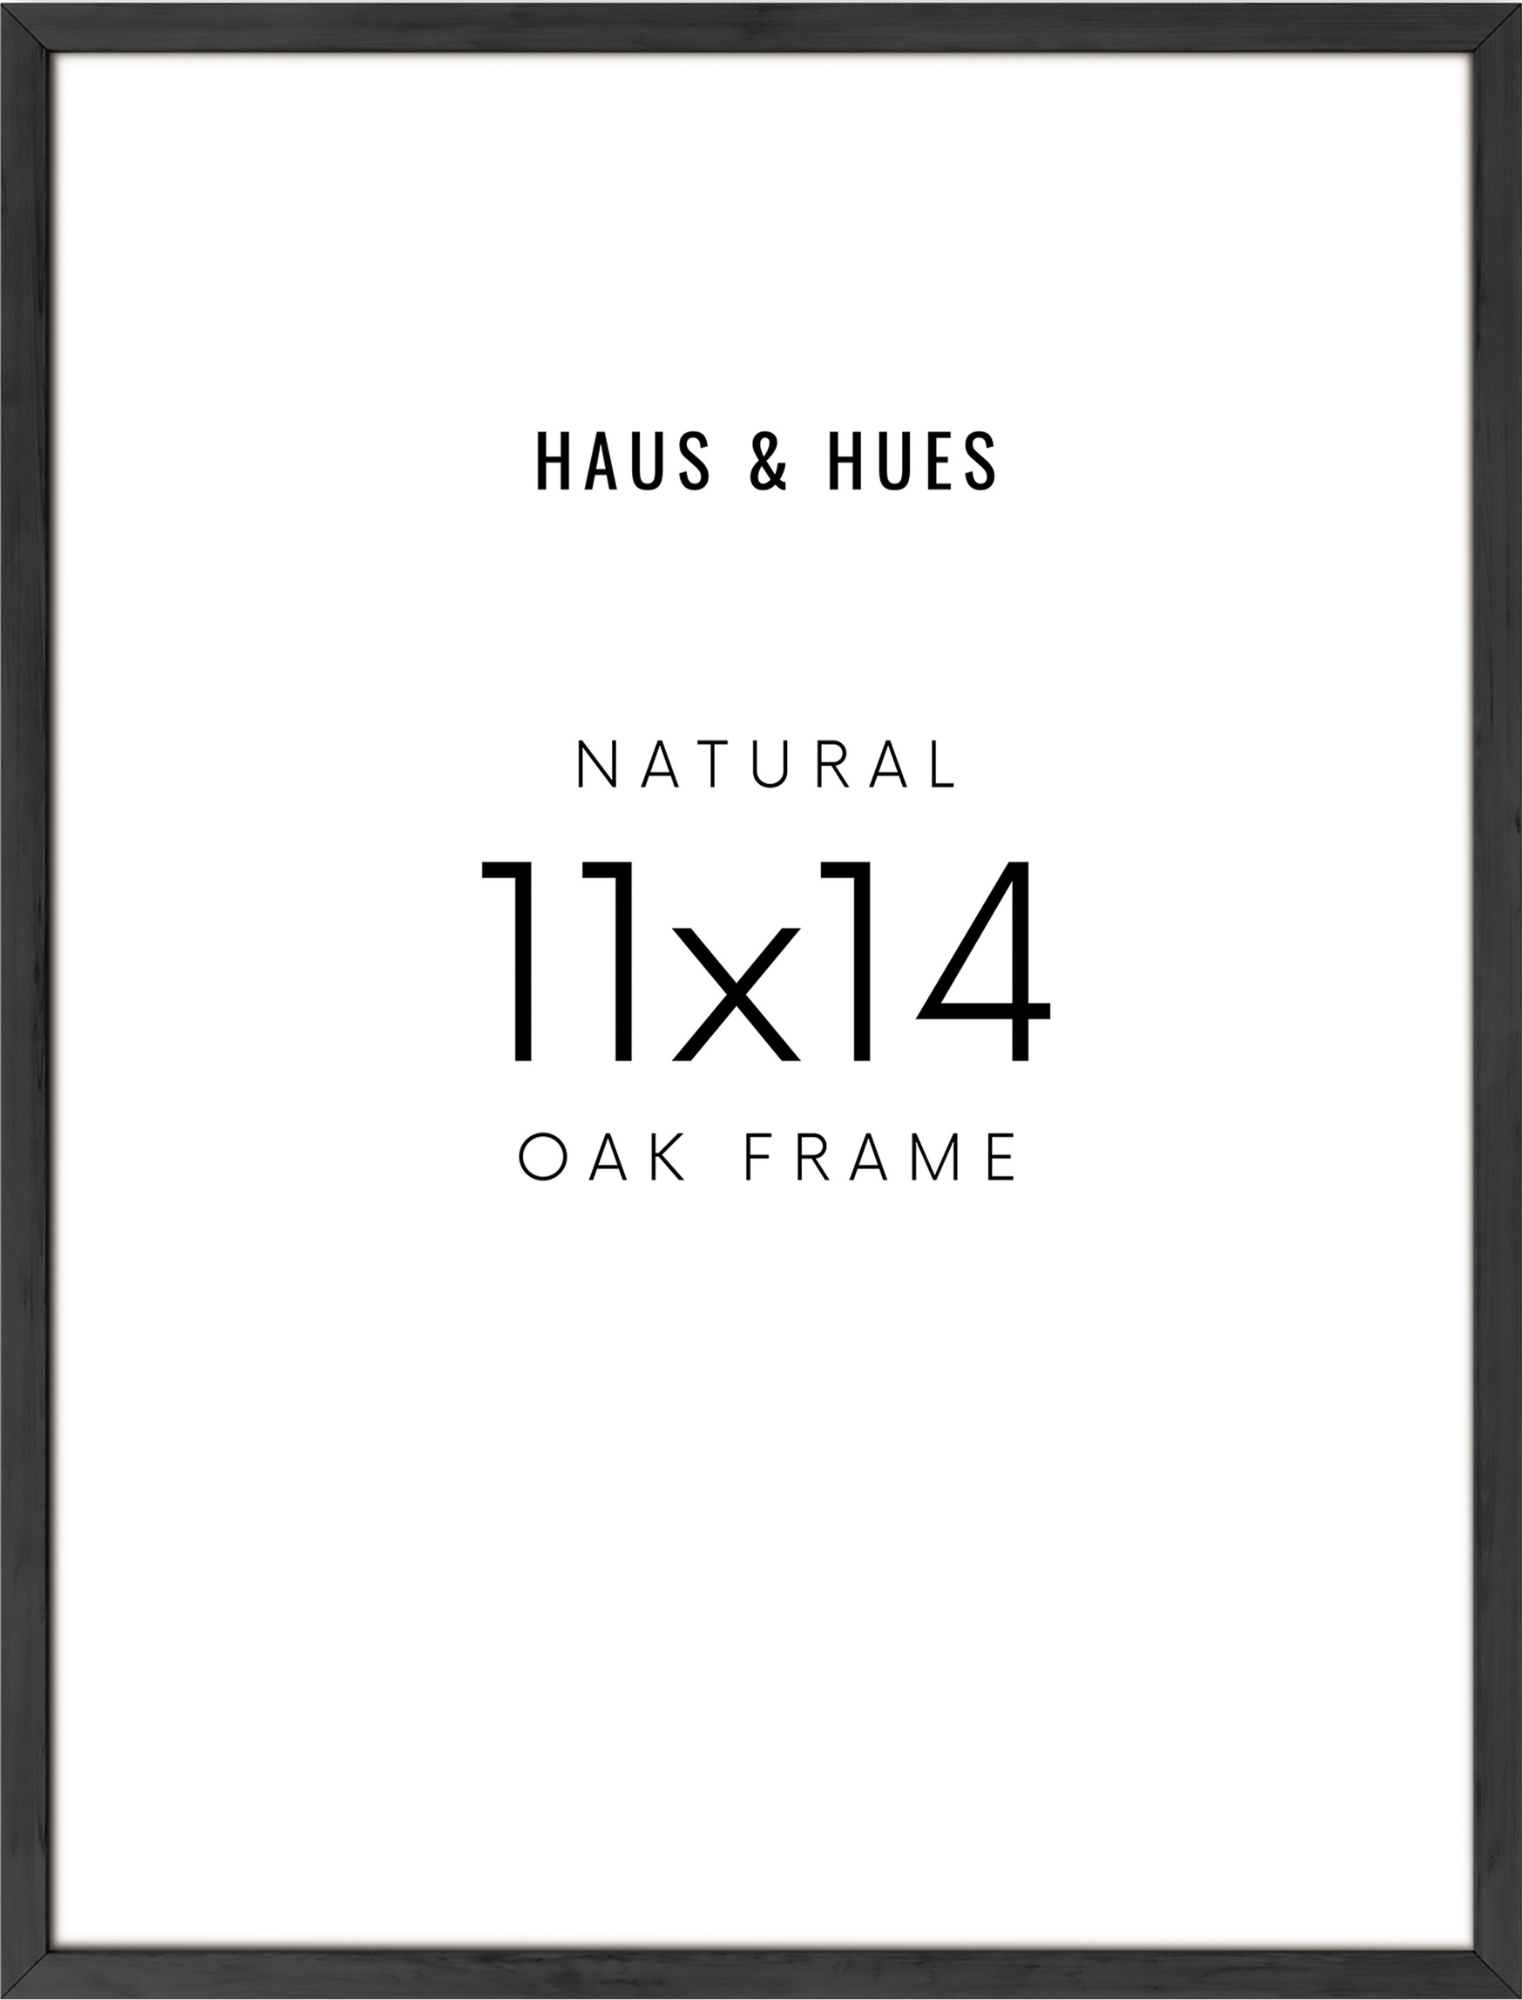 Haus and Hues 16x20 Black Oak Wood Frames Set of 1 - 16x20 Picture Frames  for Wall, 16x20 Black Picture Frame, Poster Frame 16x20 Frames for Wall